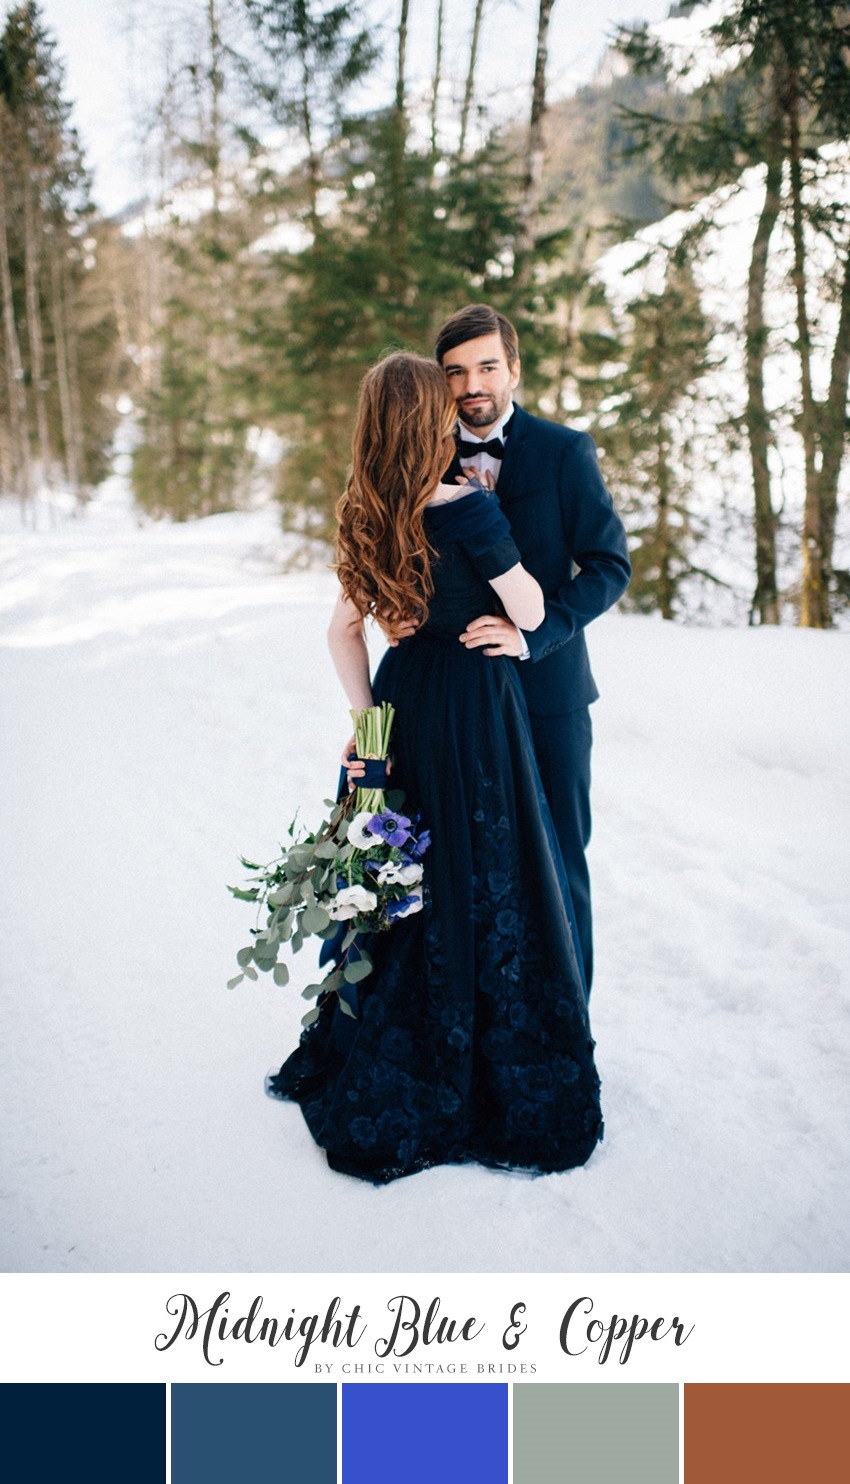 Stunning Winter Wedding Color Palette - Midnight Blue & Copper